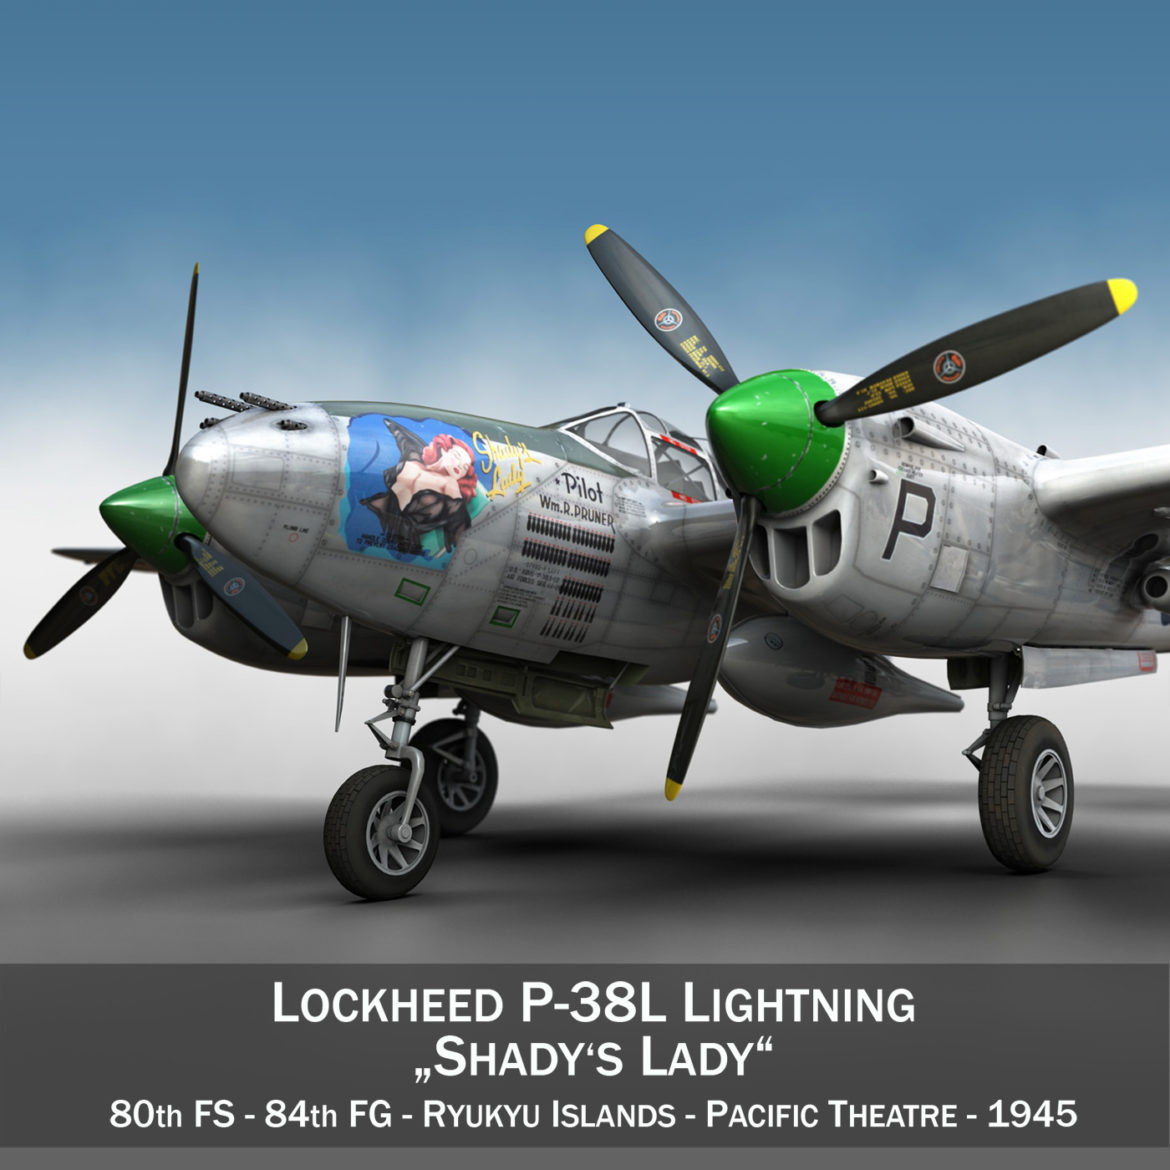 lockheed p-38 lightning – shadys lady 3d model fbx lwo lw lws obj c4d 303782